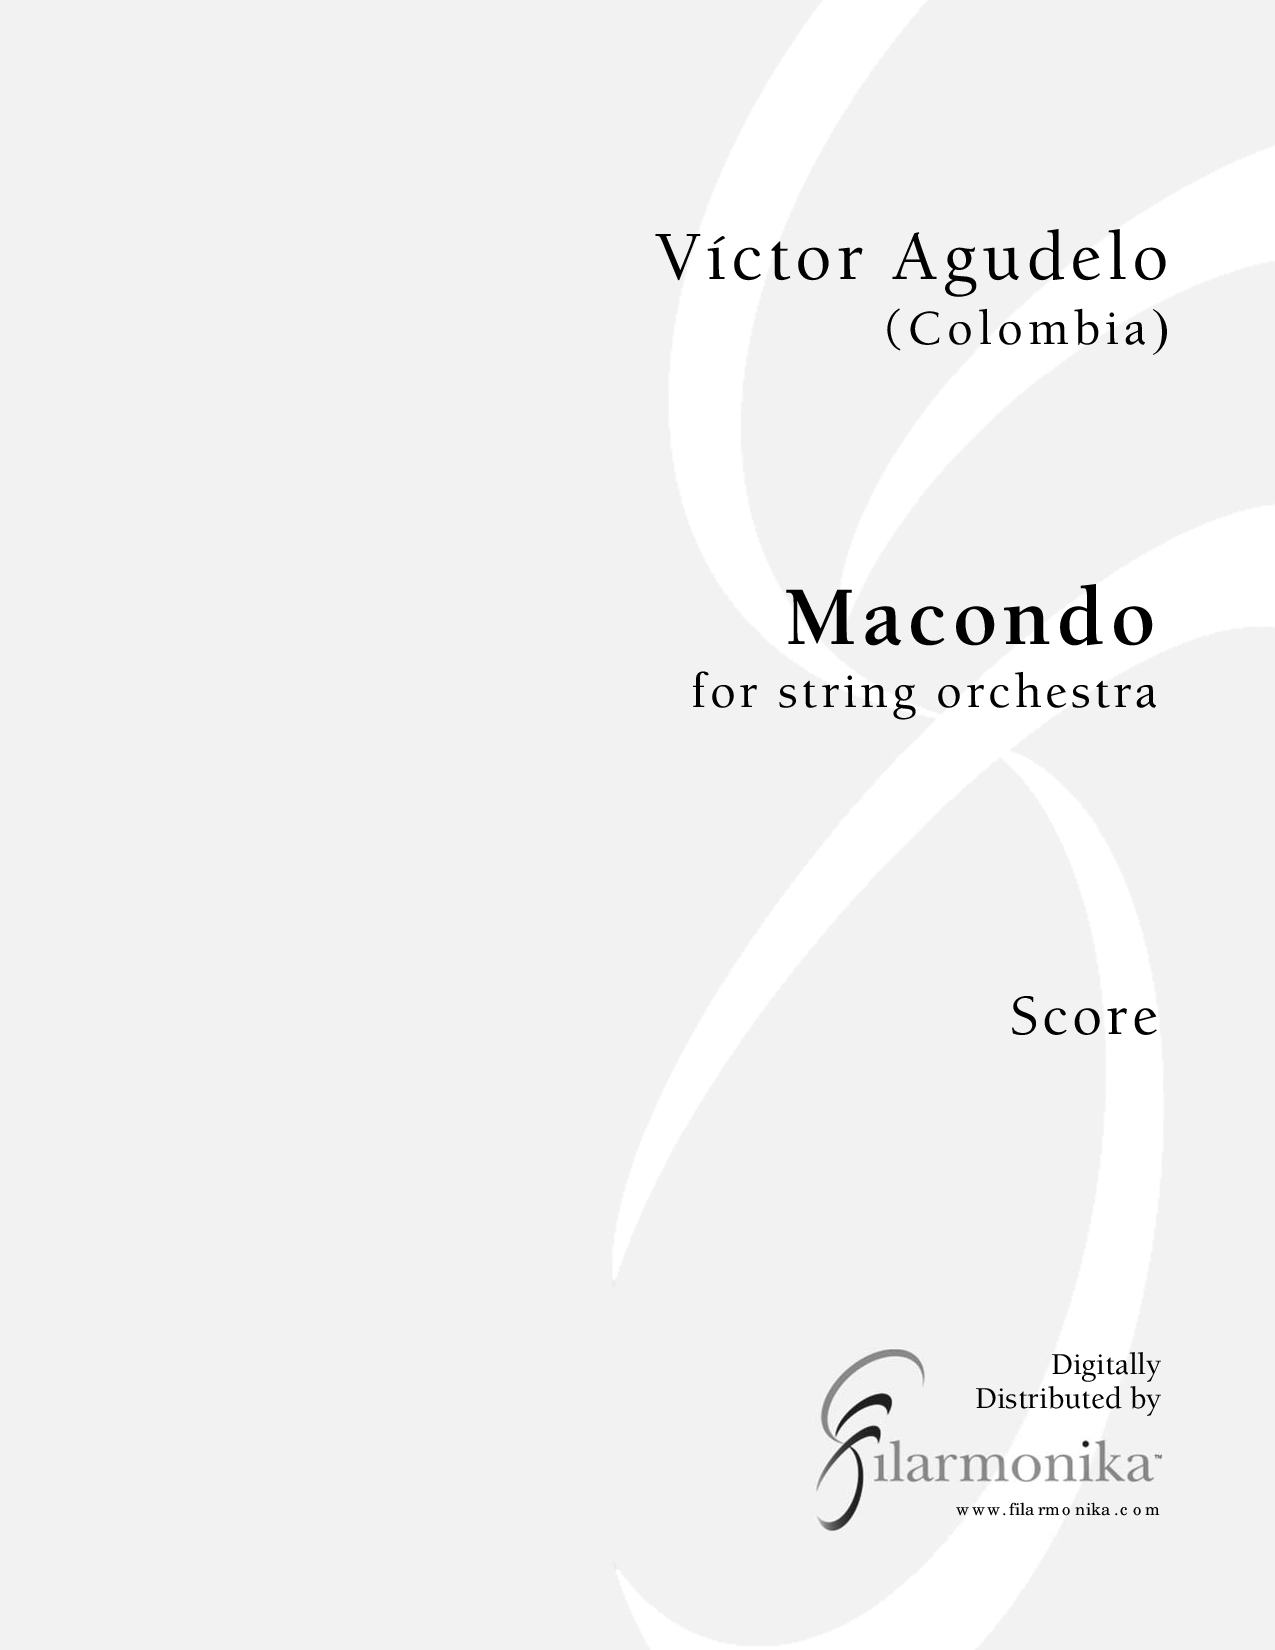 Macondo, for string orchestra